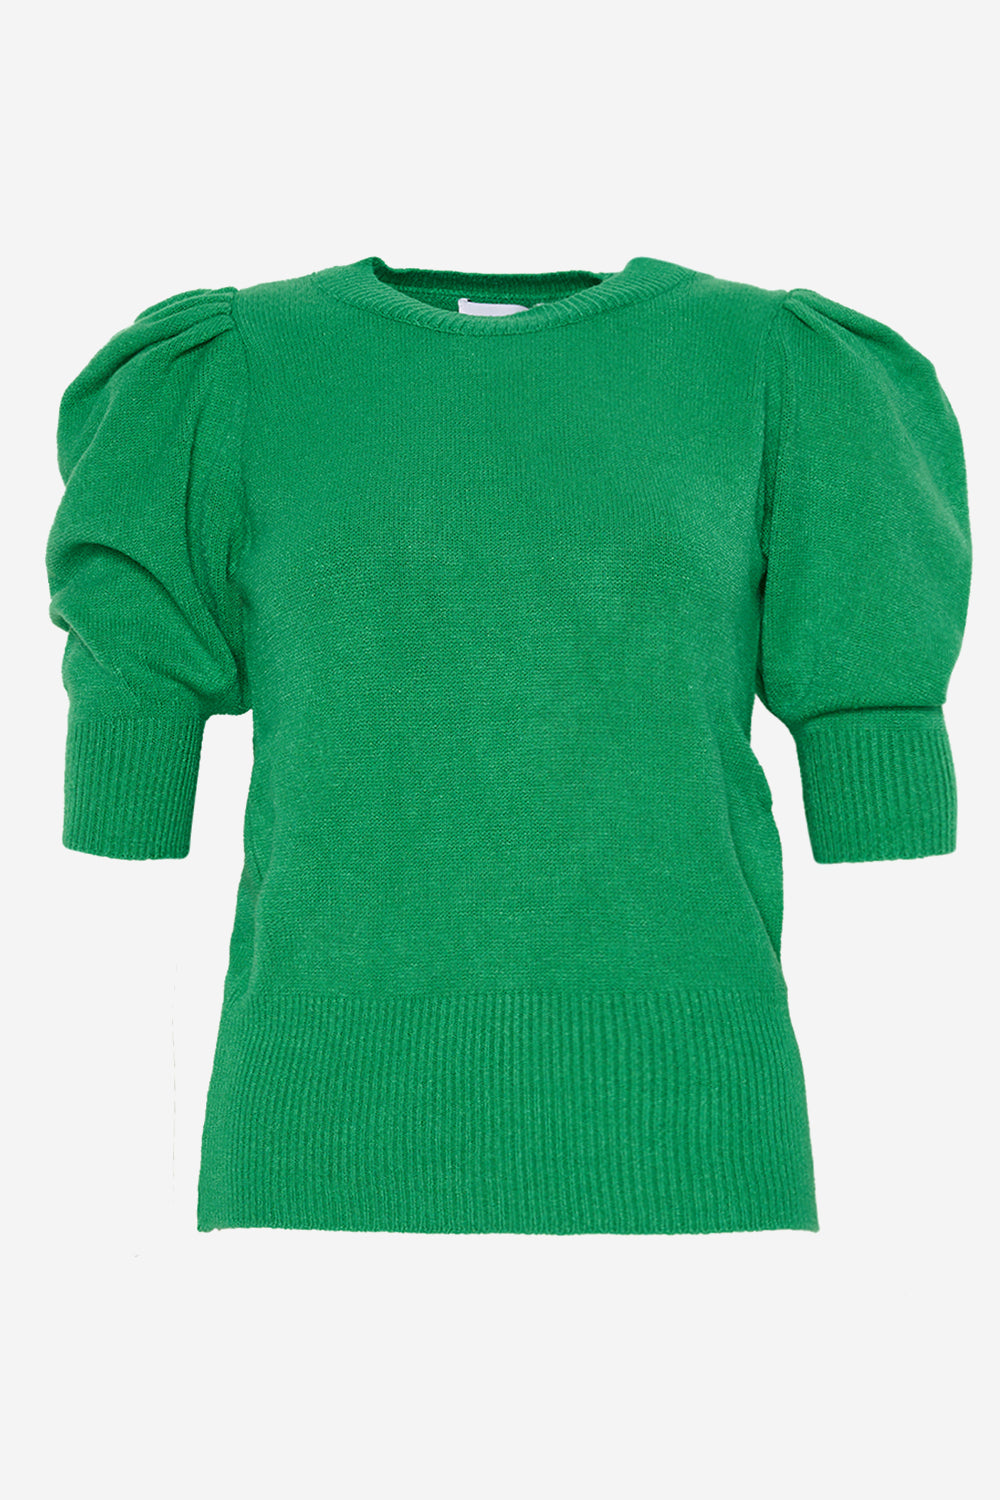 Pax Knit Sweater Green